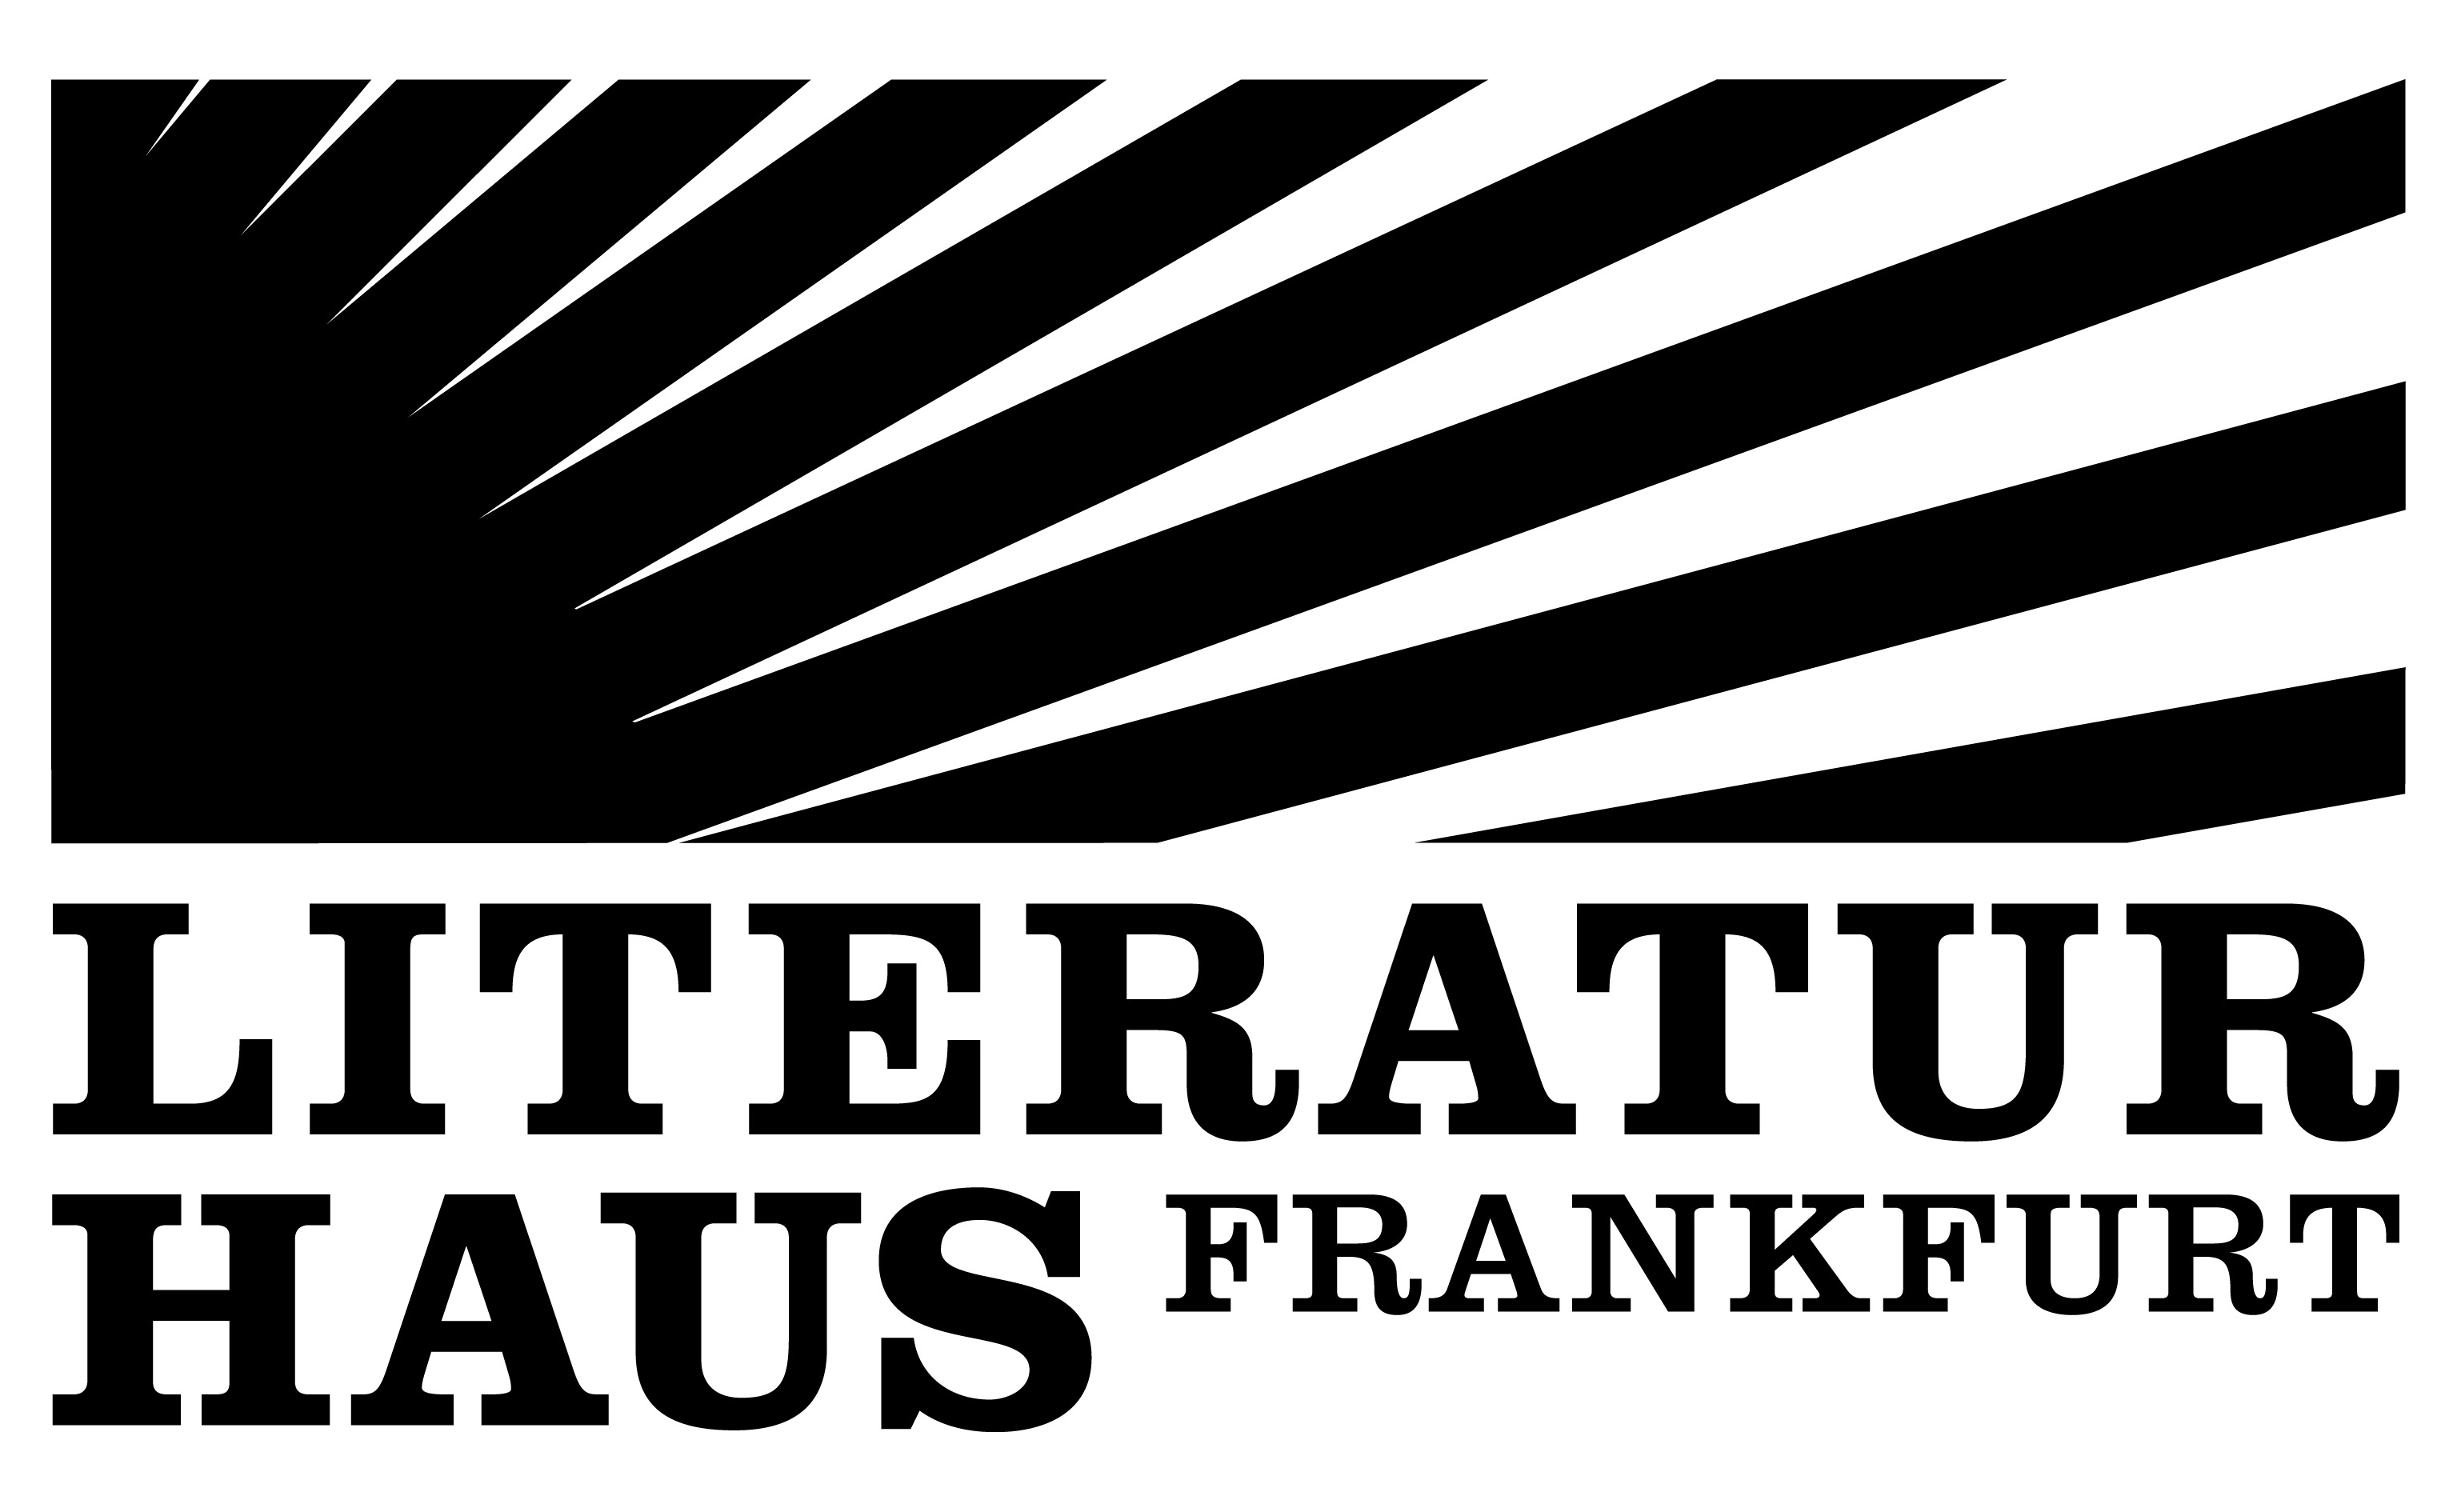 Literaturhaus Frankfurt am Main e.V.